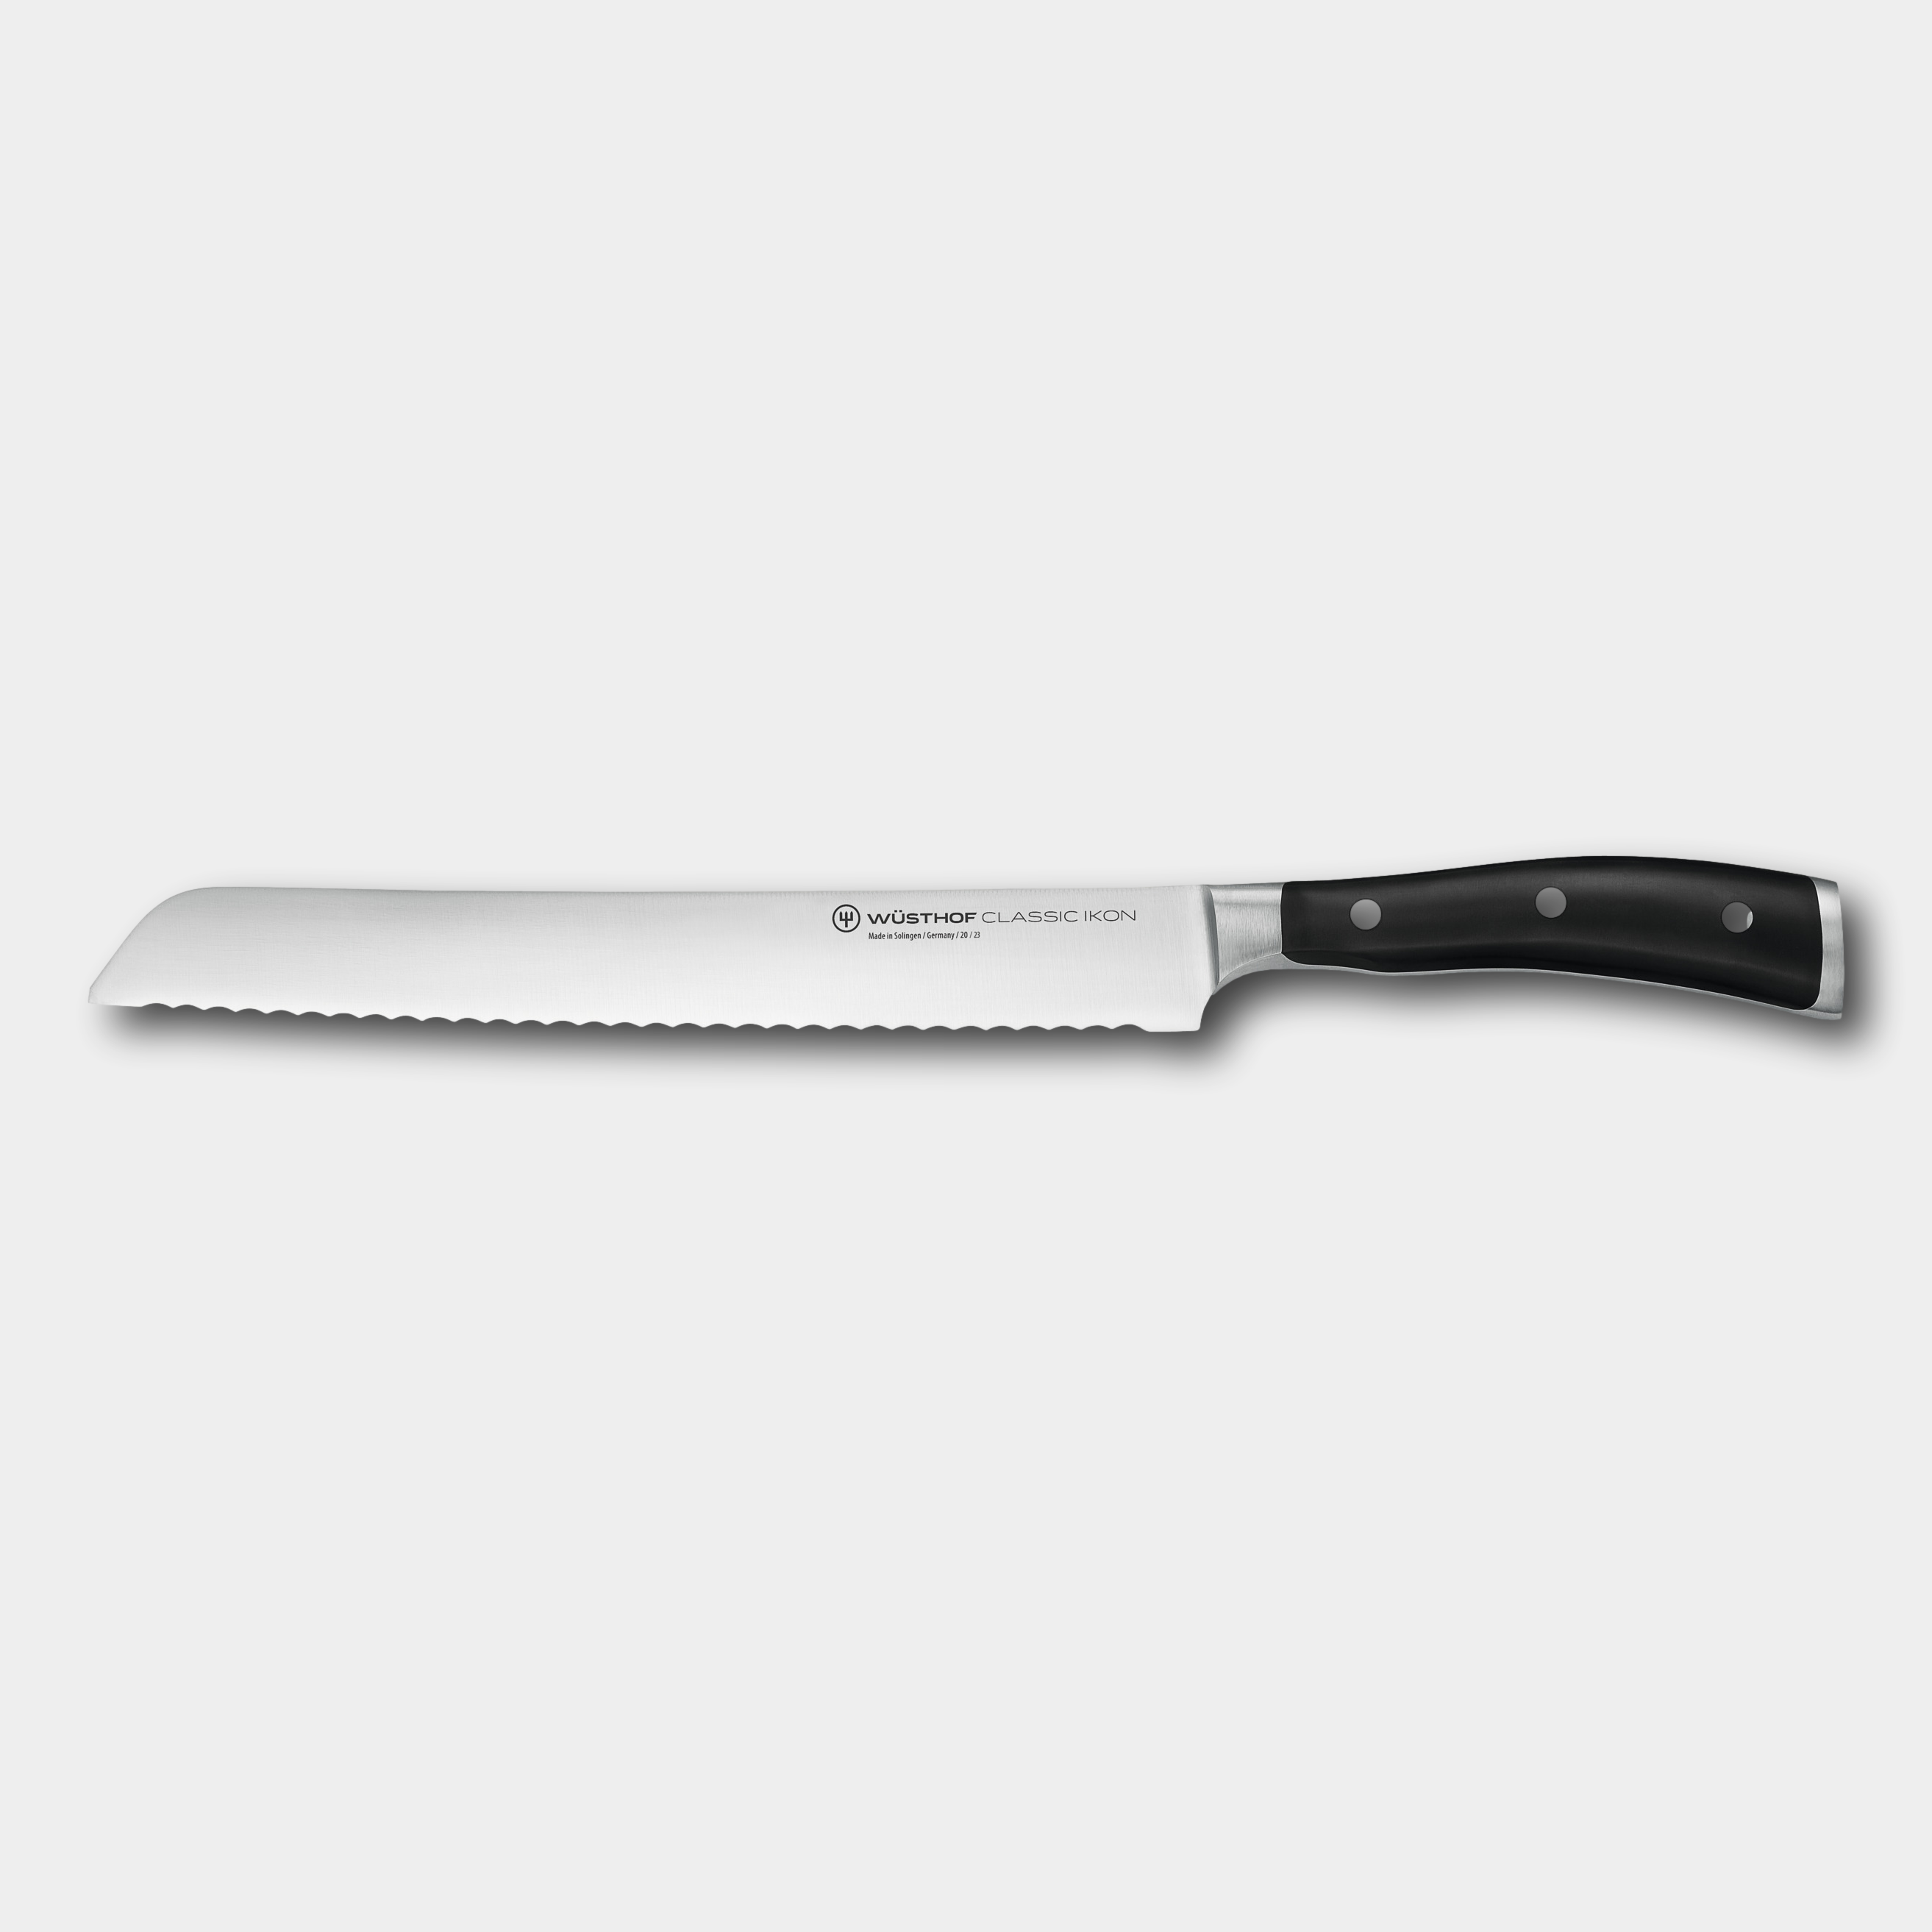 Wusthof Classic IKON 23cm Bread Knife